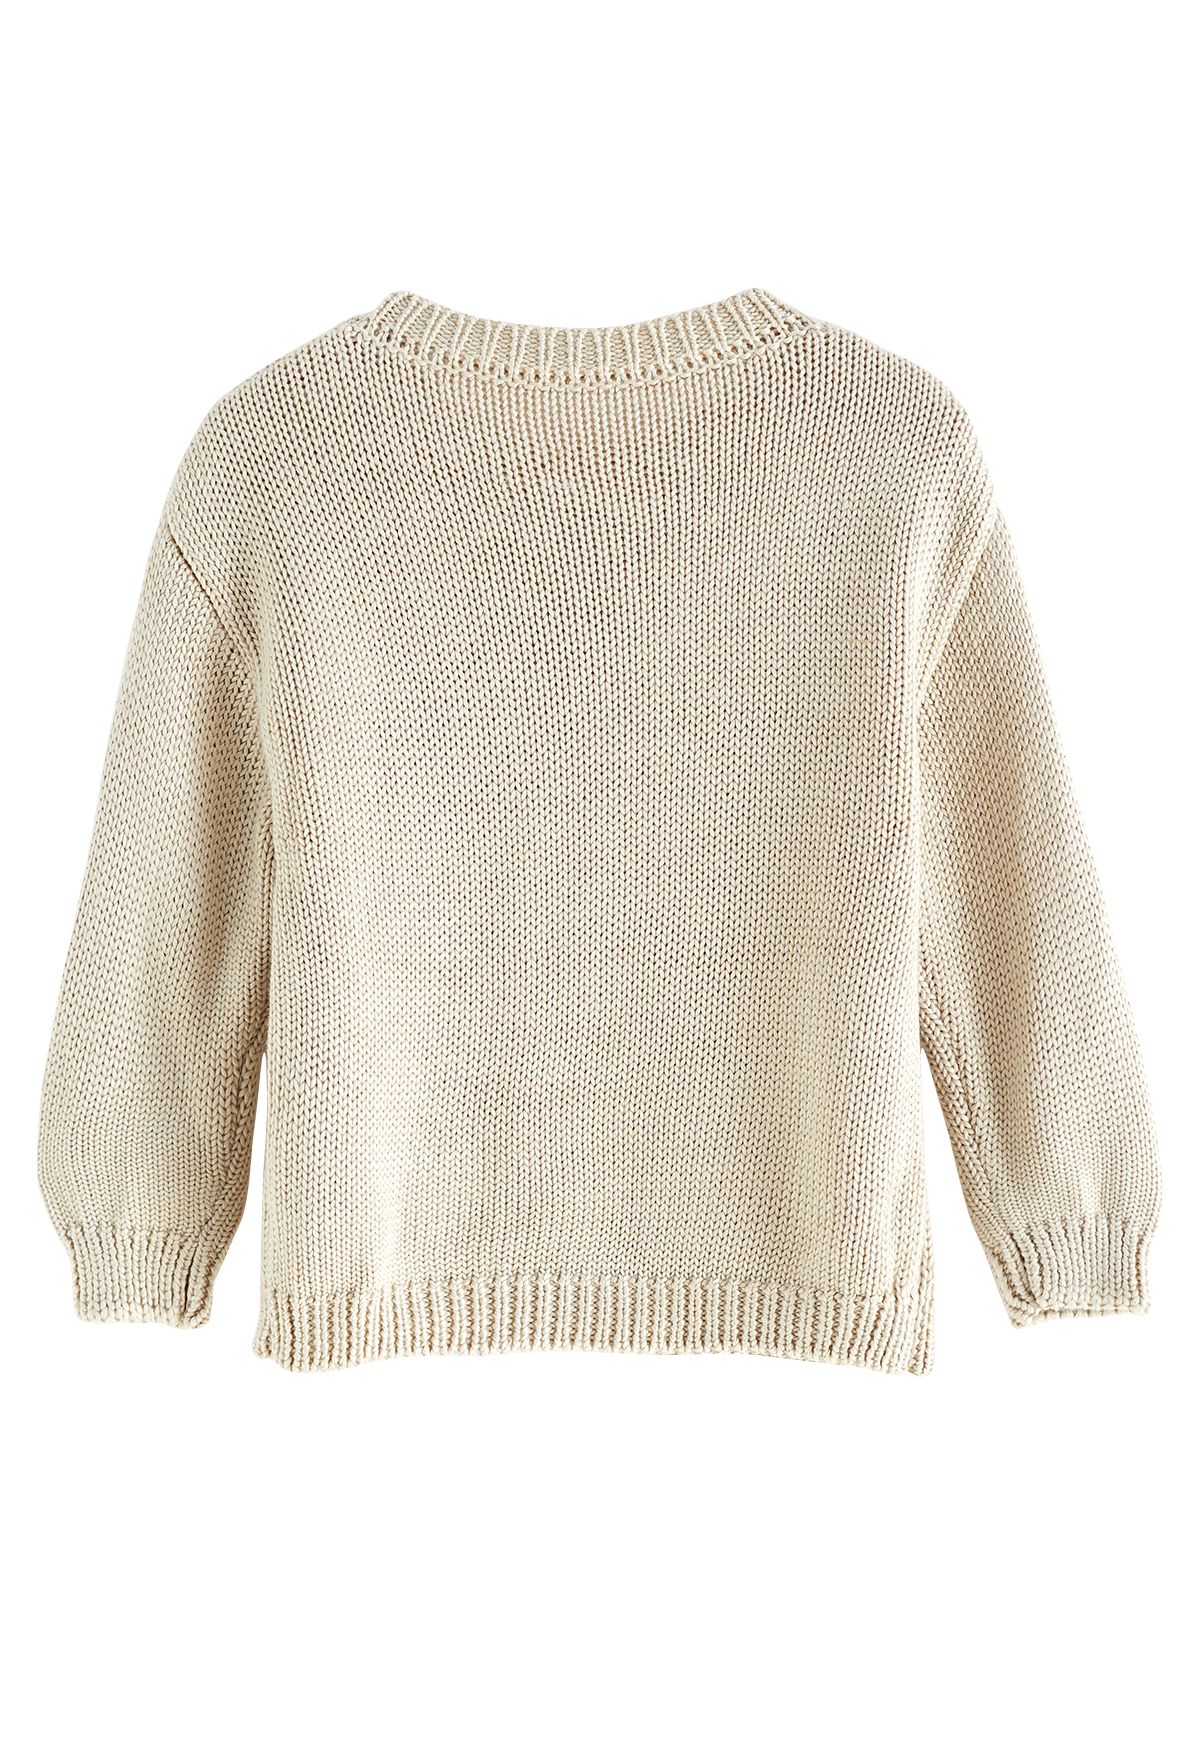 Pom-Pom Hand-Knit Sweater in Cream For Kids